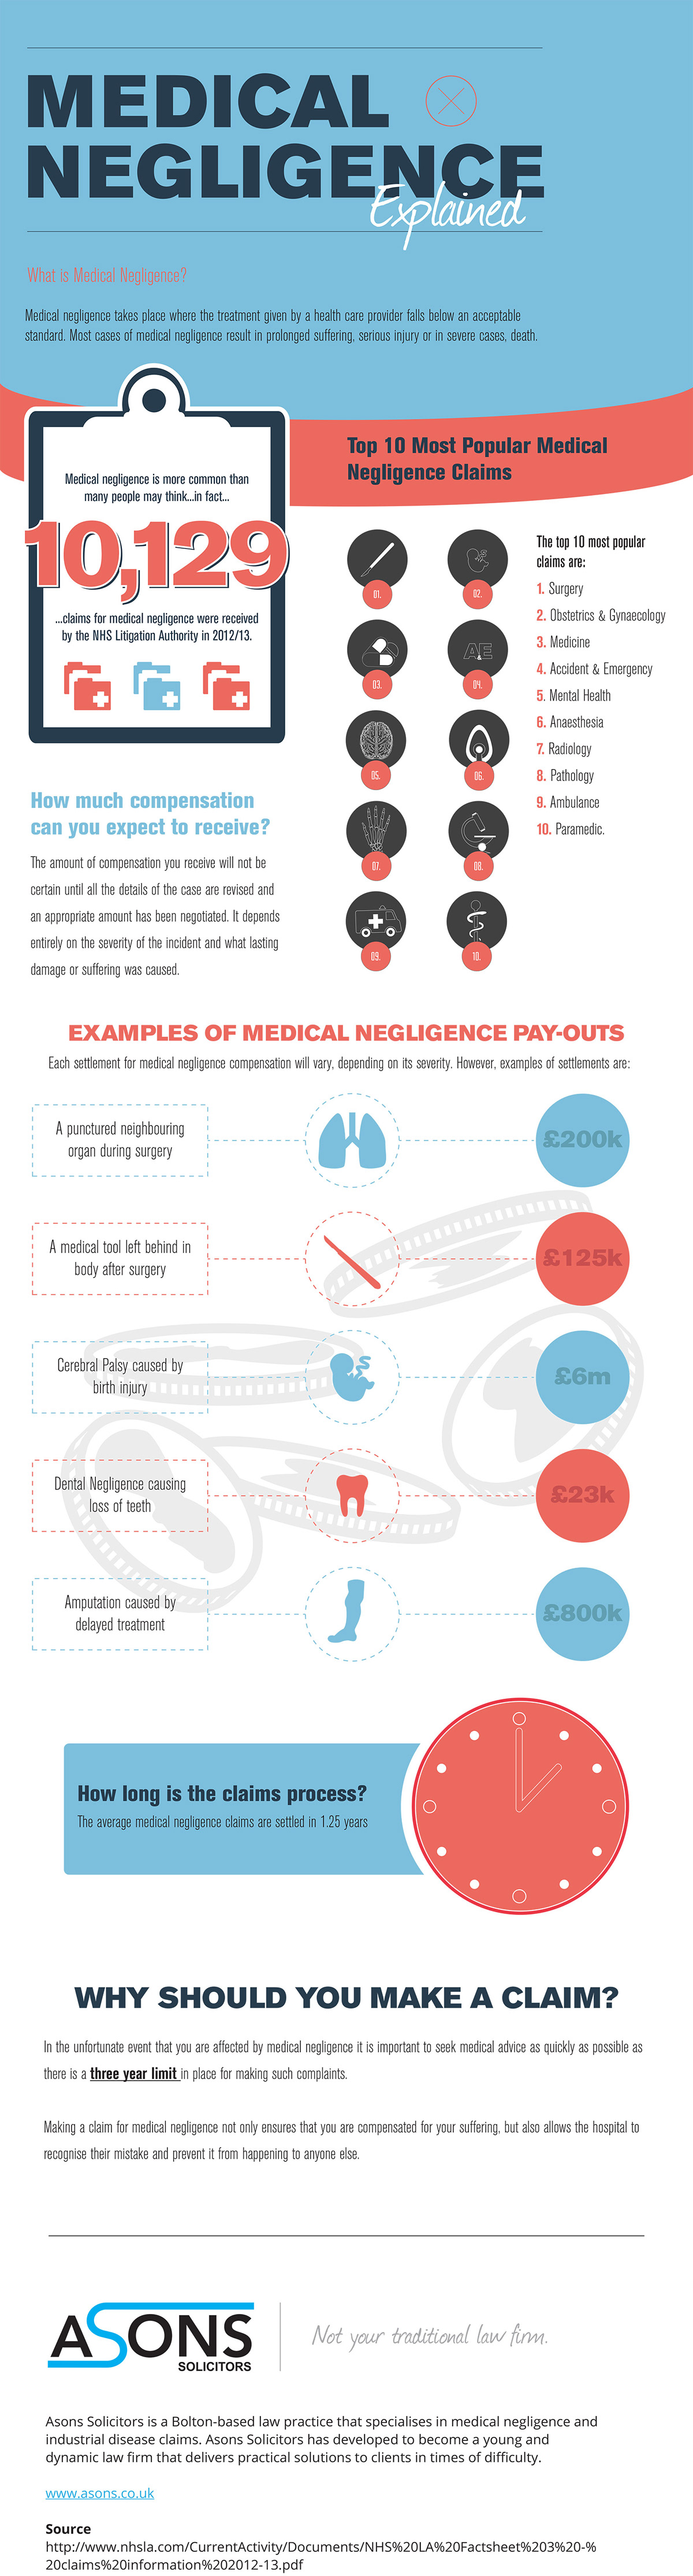 medical malpractice negligence infographic design